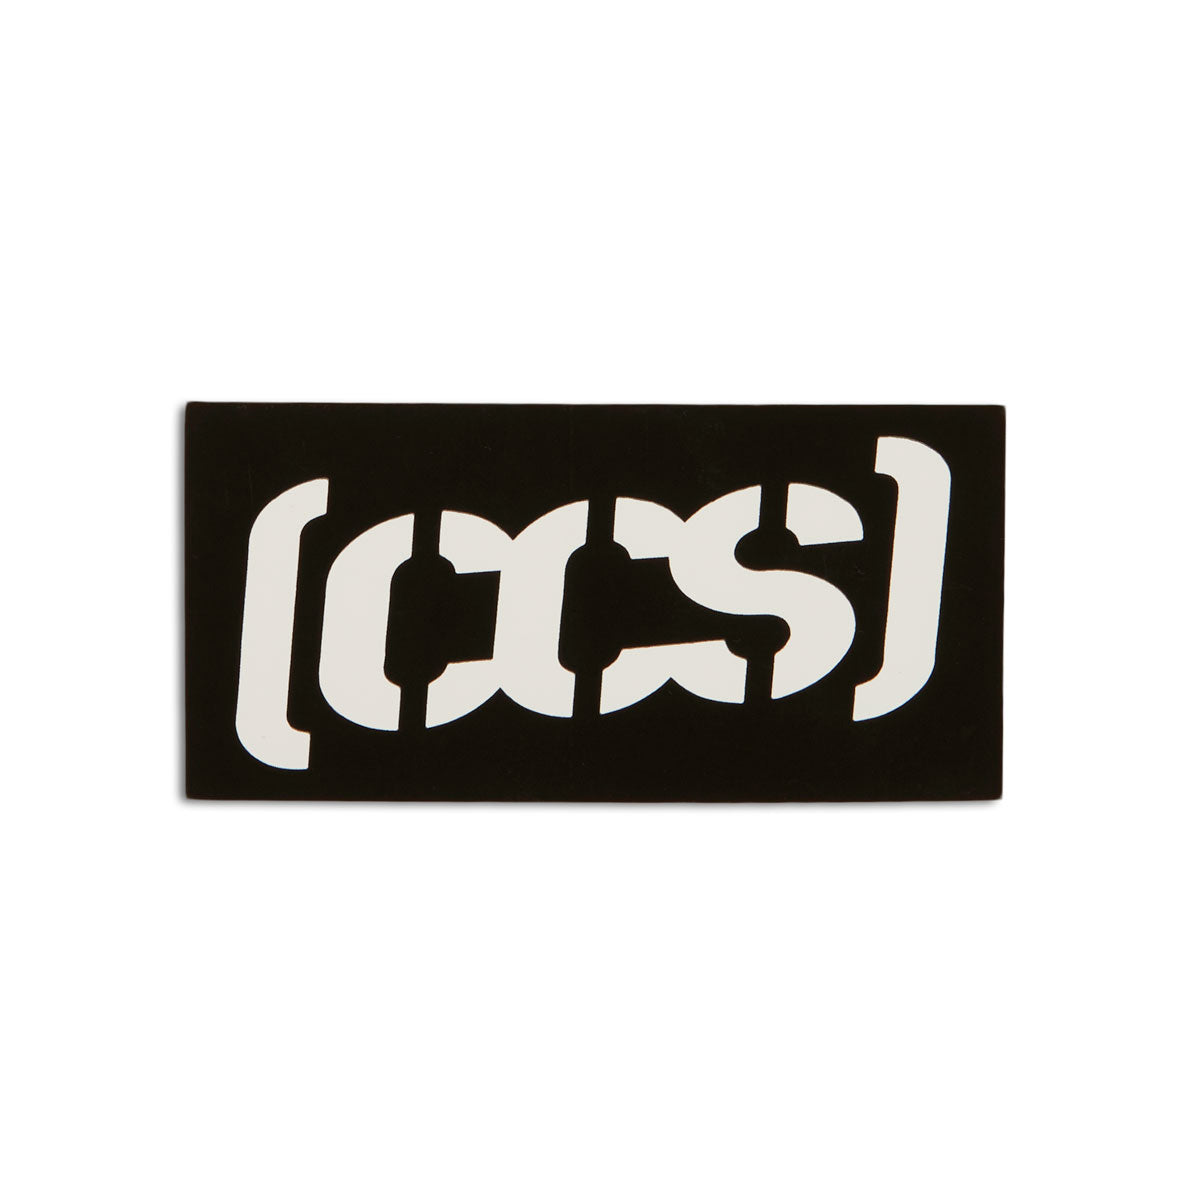 CCS Small Stock Stickers - Black image 1